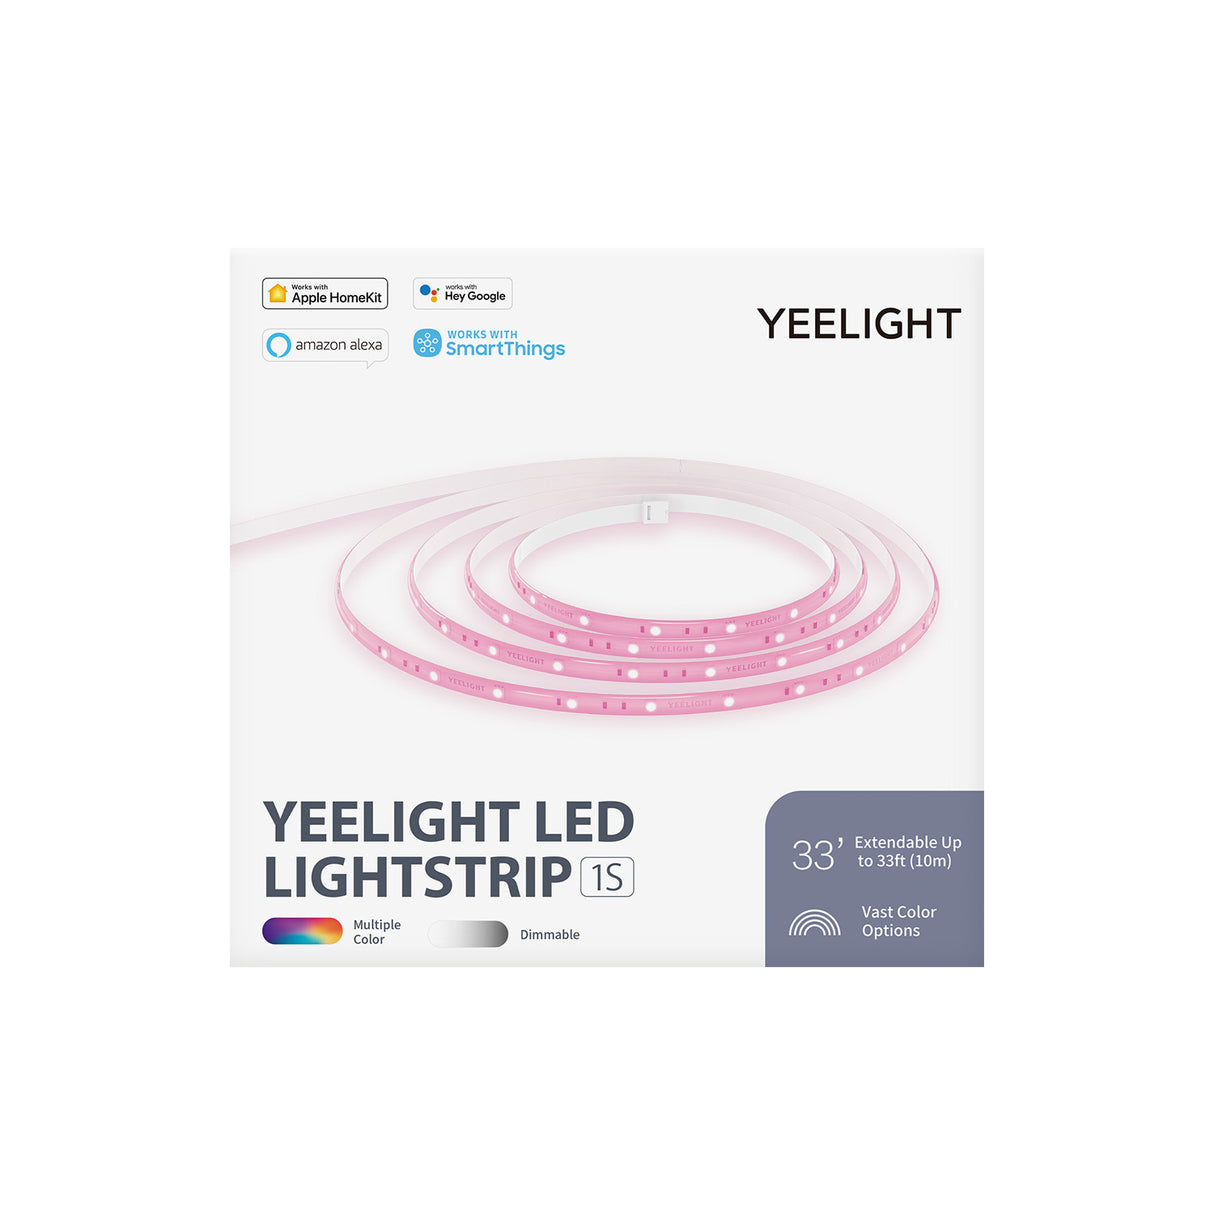 Yeelight LED Lightstrip 1S Wi-Fi